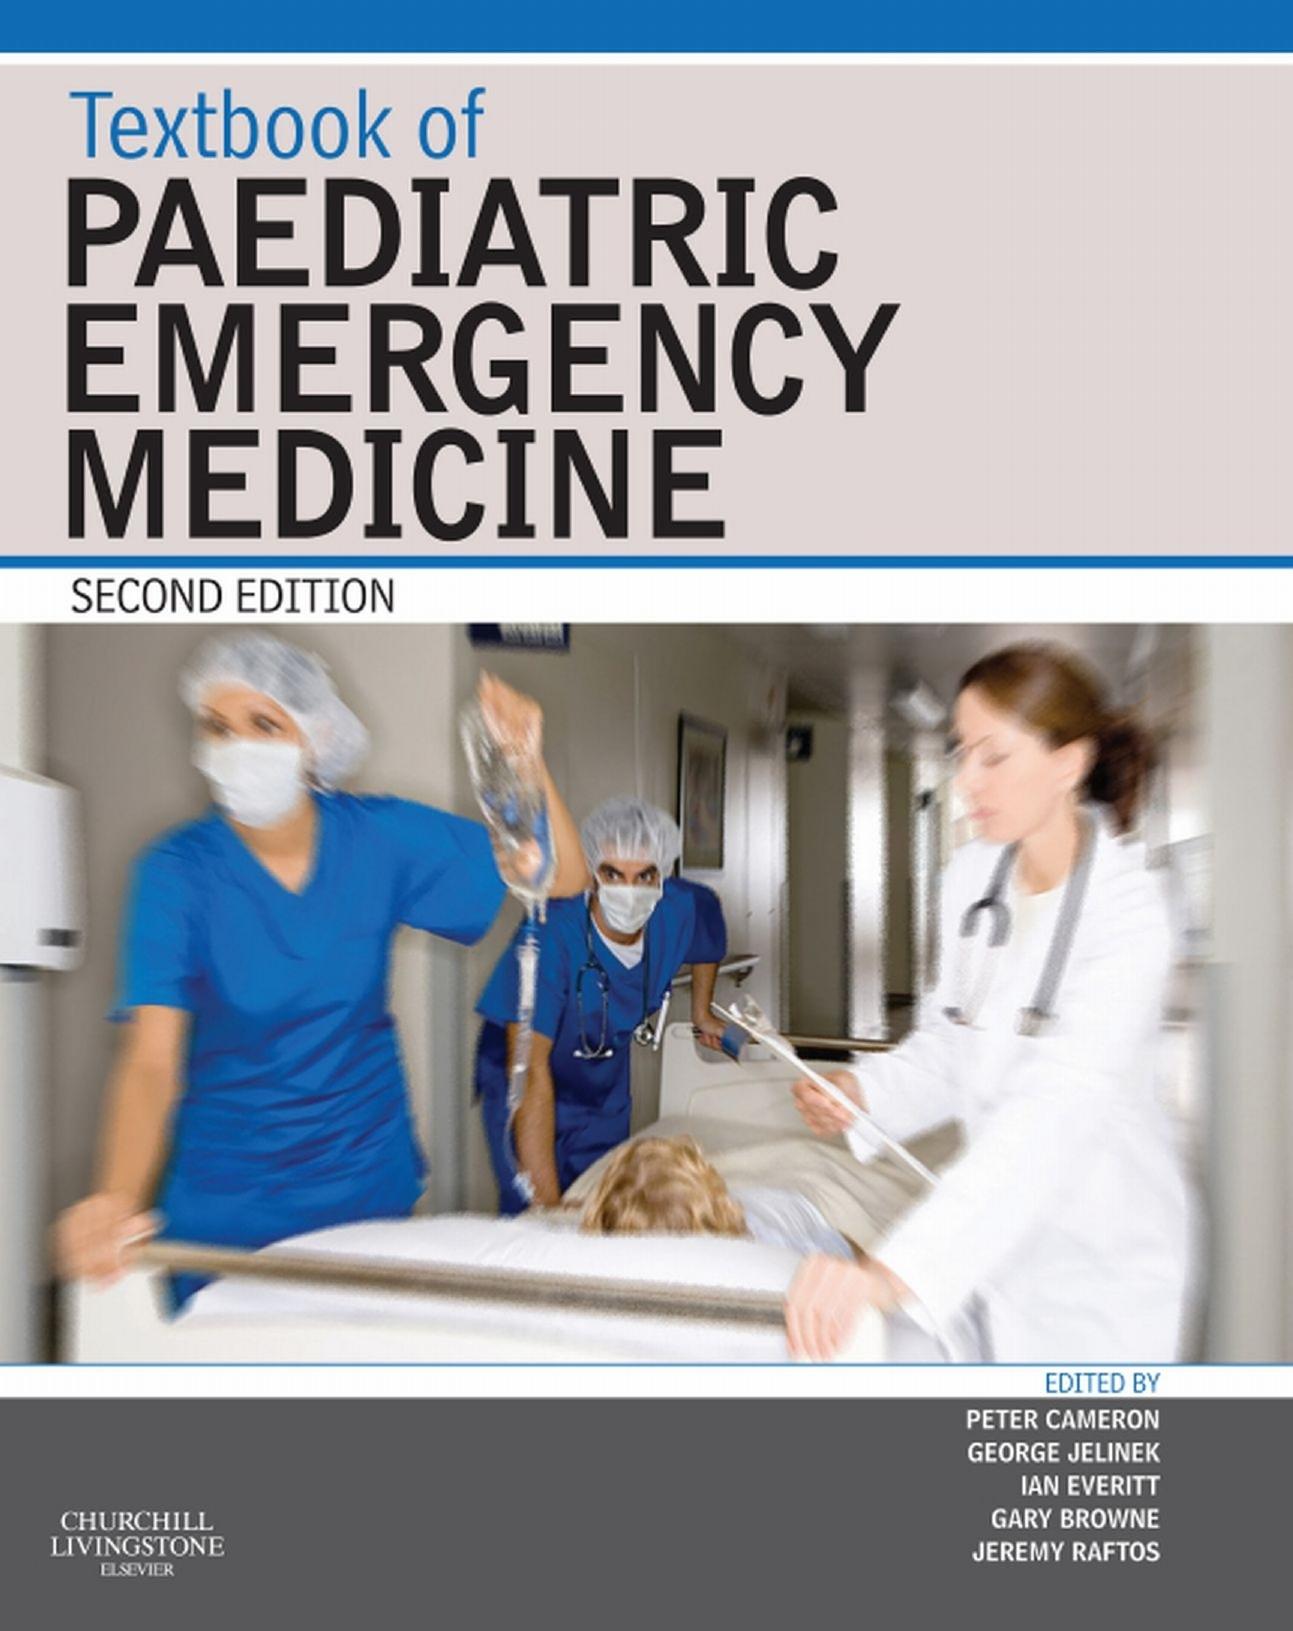 Textbook of paediatric emergency medicine (2nd ed 2012